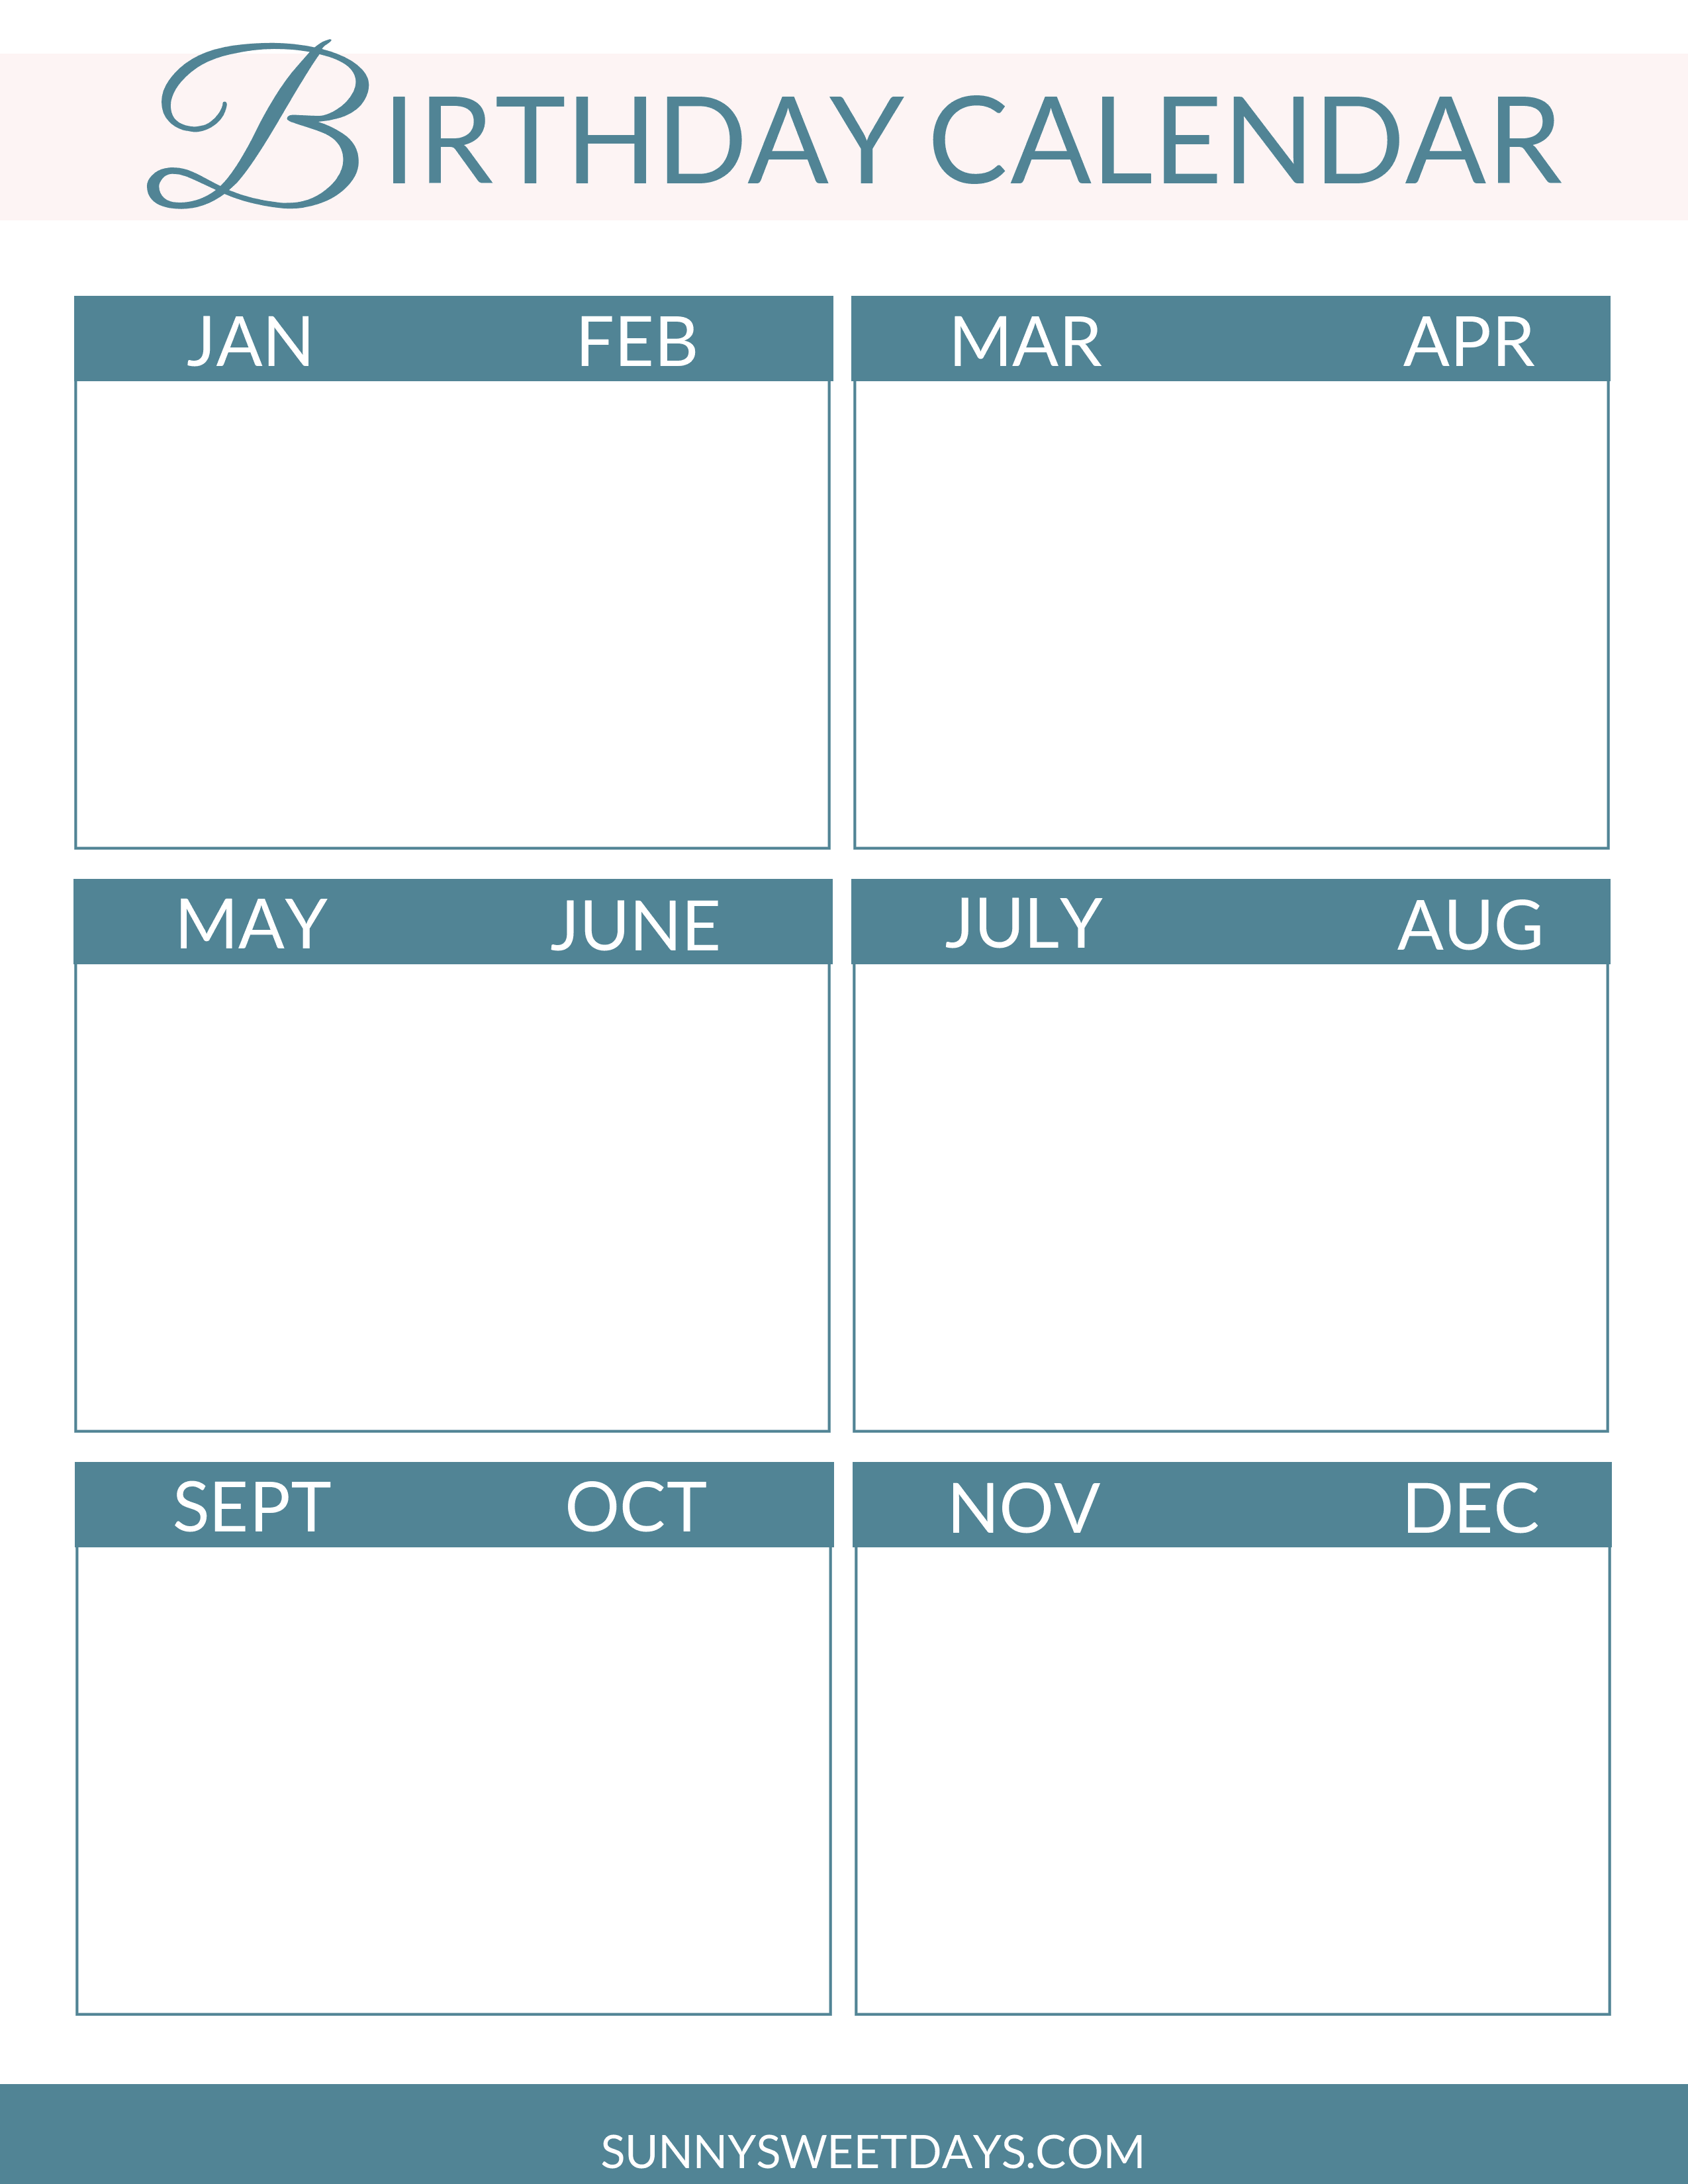 free calendar template for birthdays 35